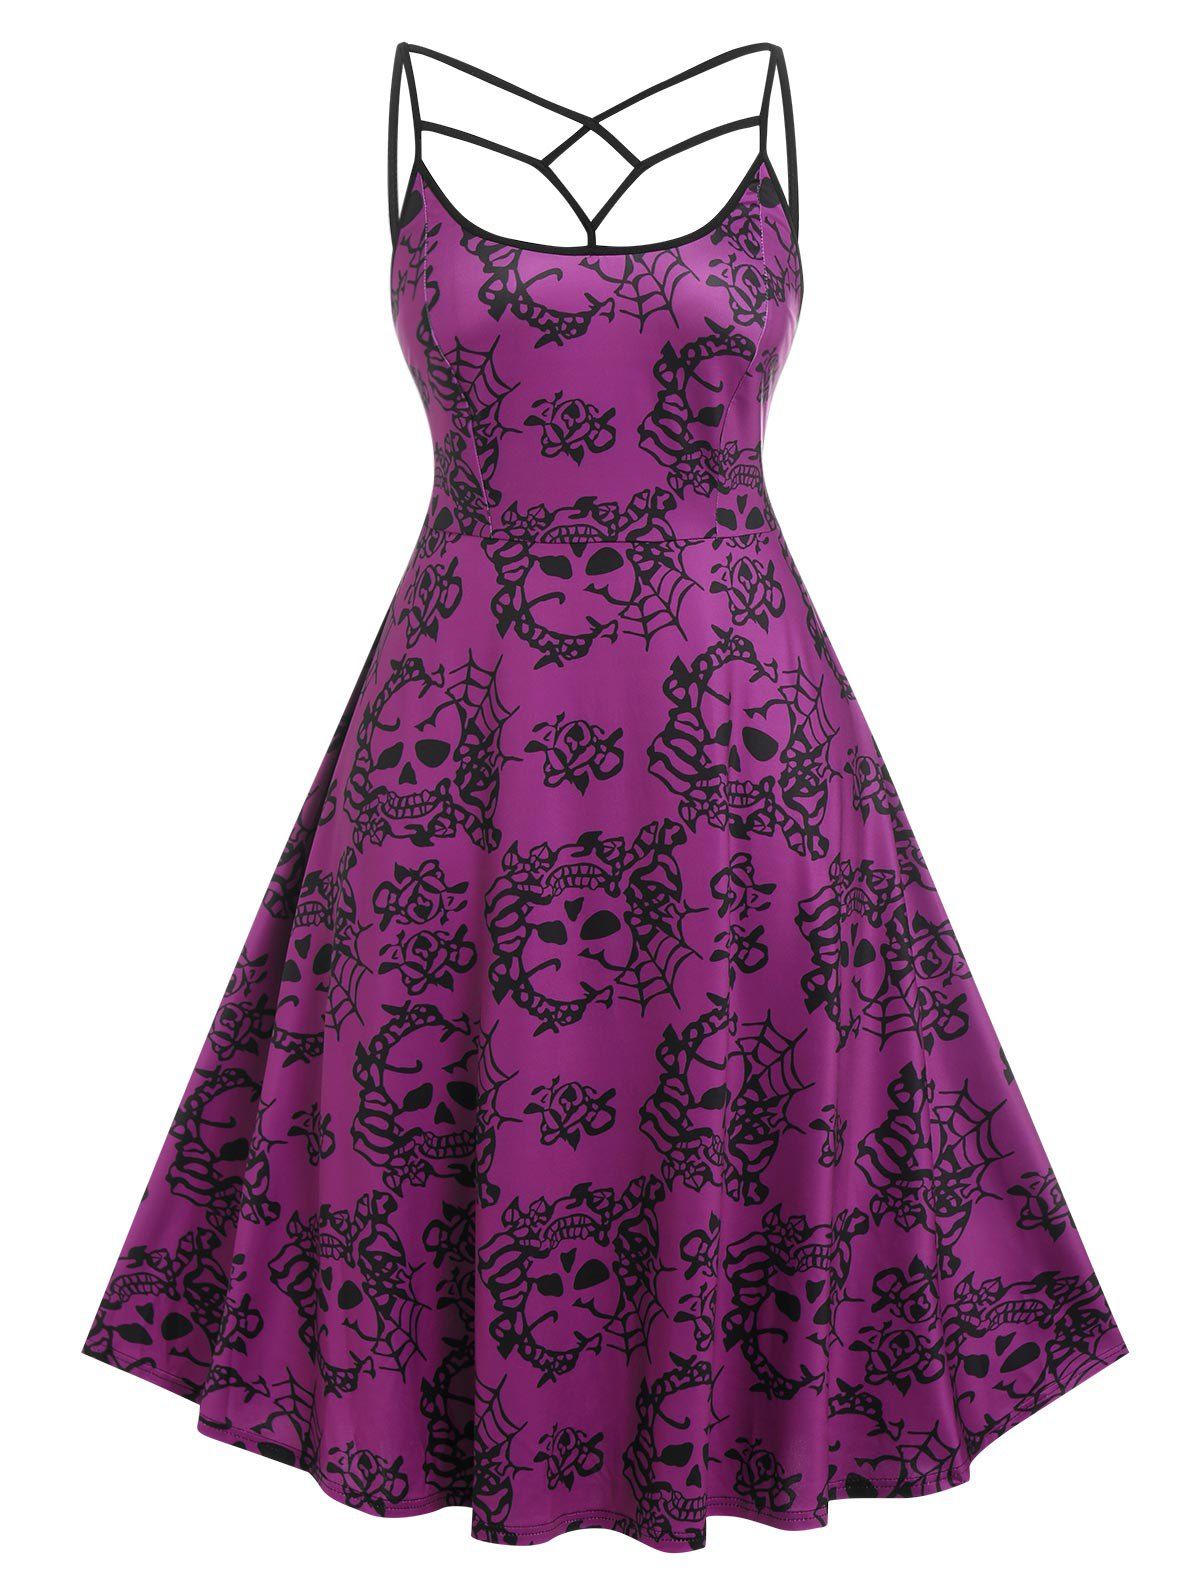 Discount Plus Size Skull Floral Print A Line Gothic Dress  